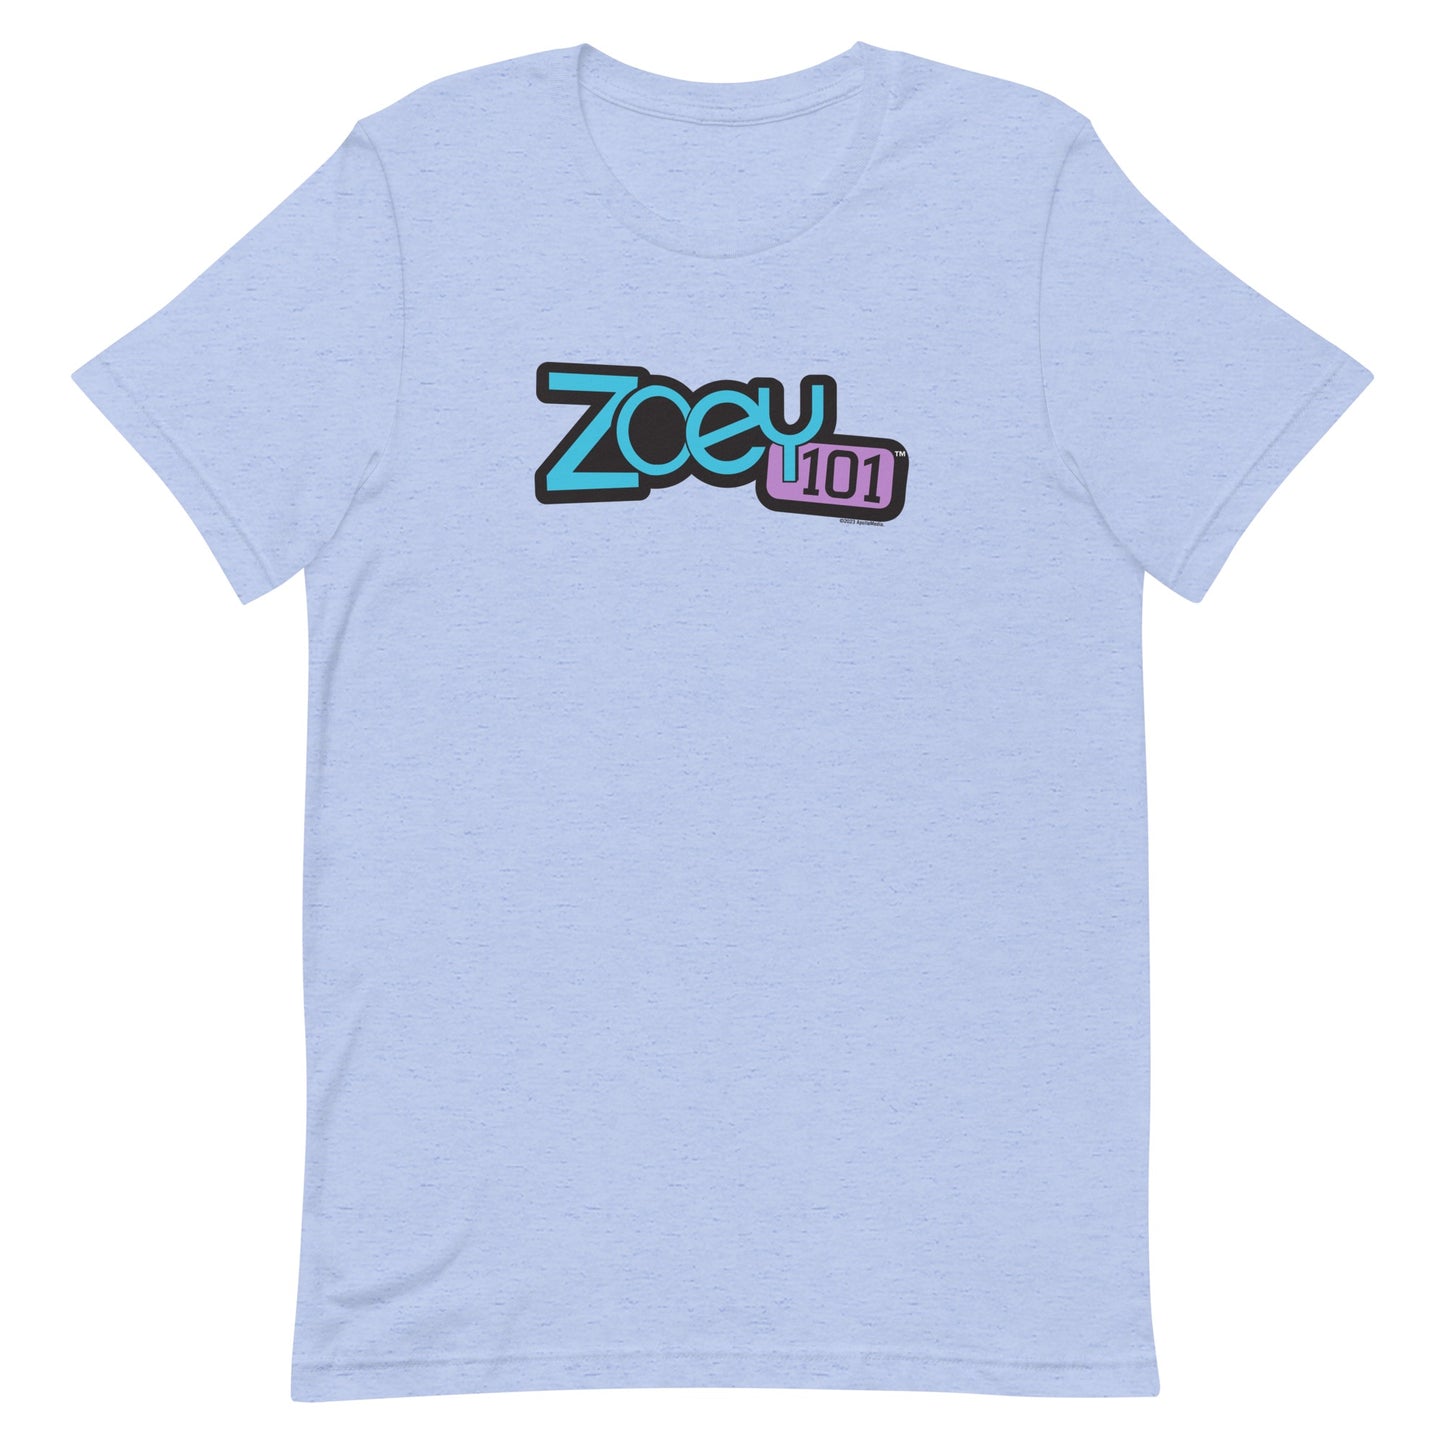 Zoey 101 Logo Adult Short Sleeve T-Shirt